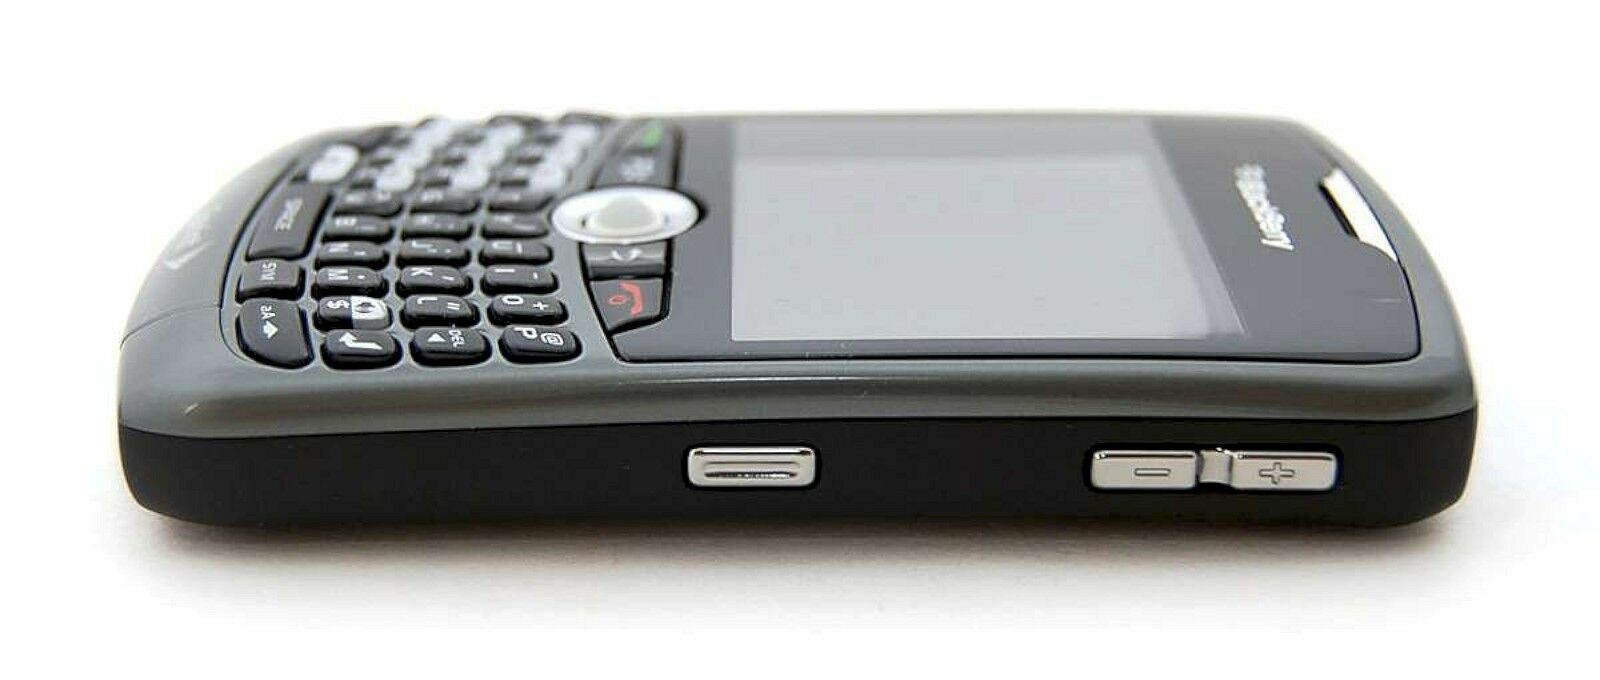 Blackberry curve 8330 phone manual